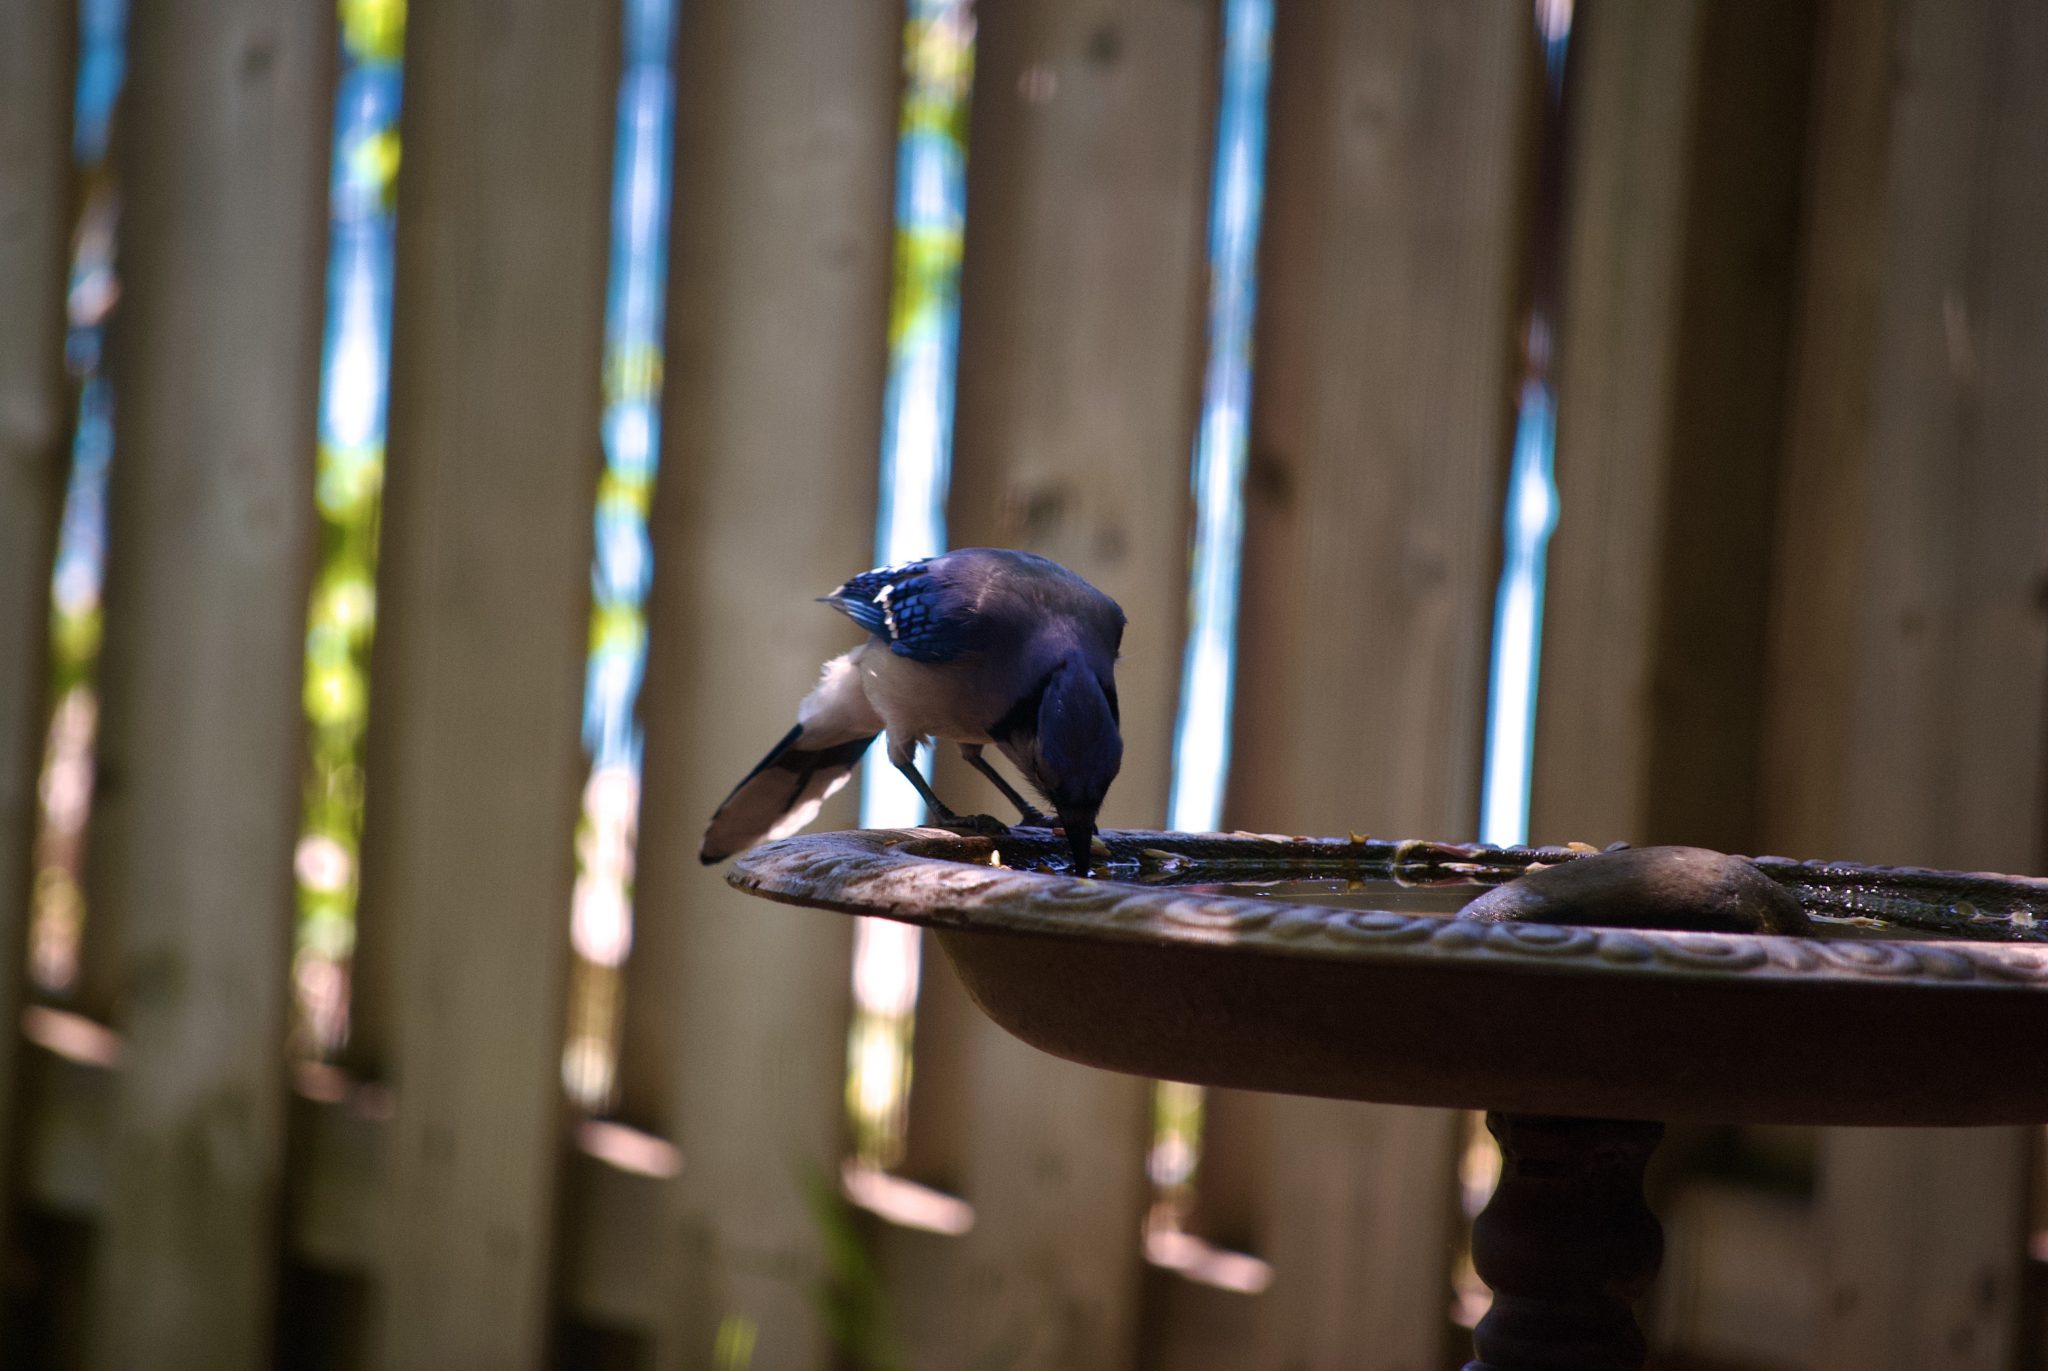 A blue jay drinks from a birdbath.